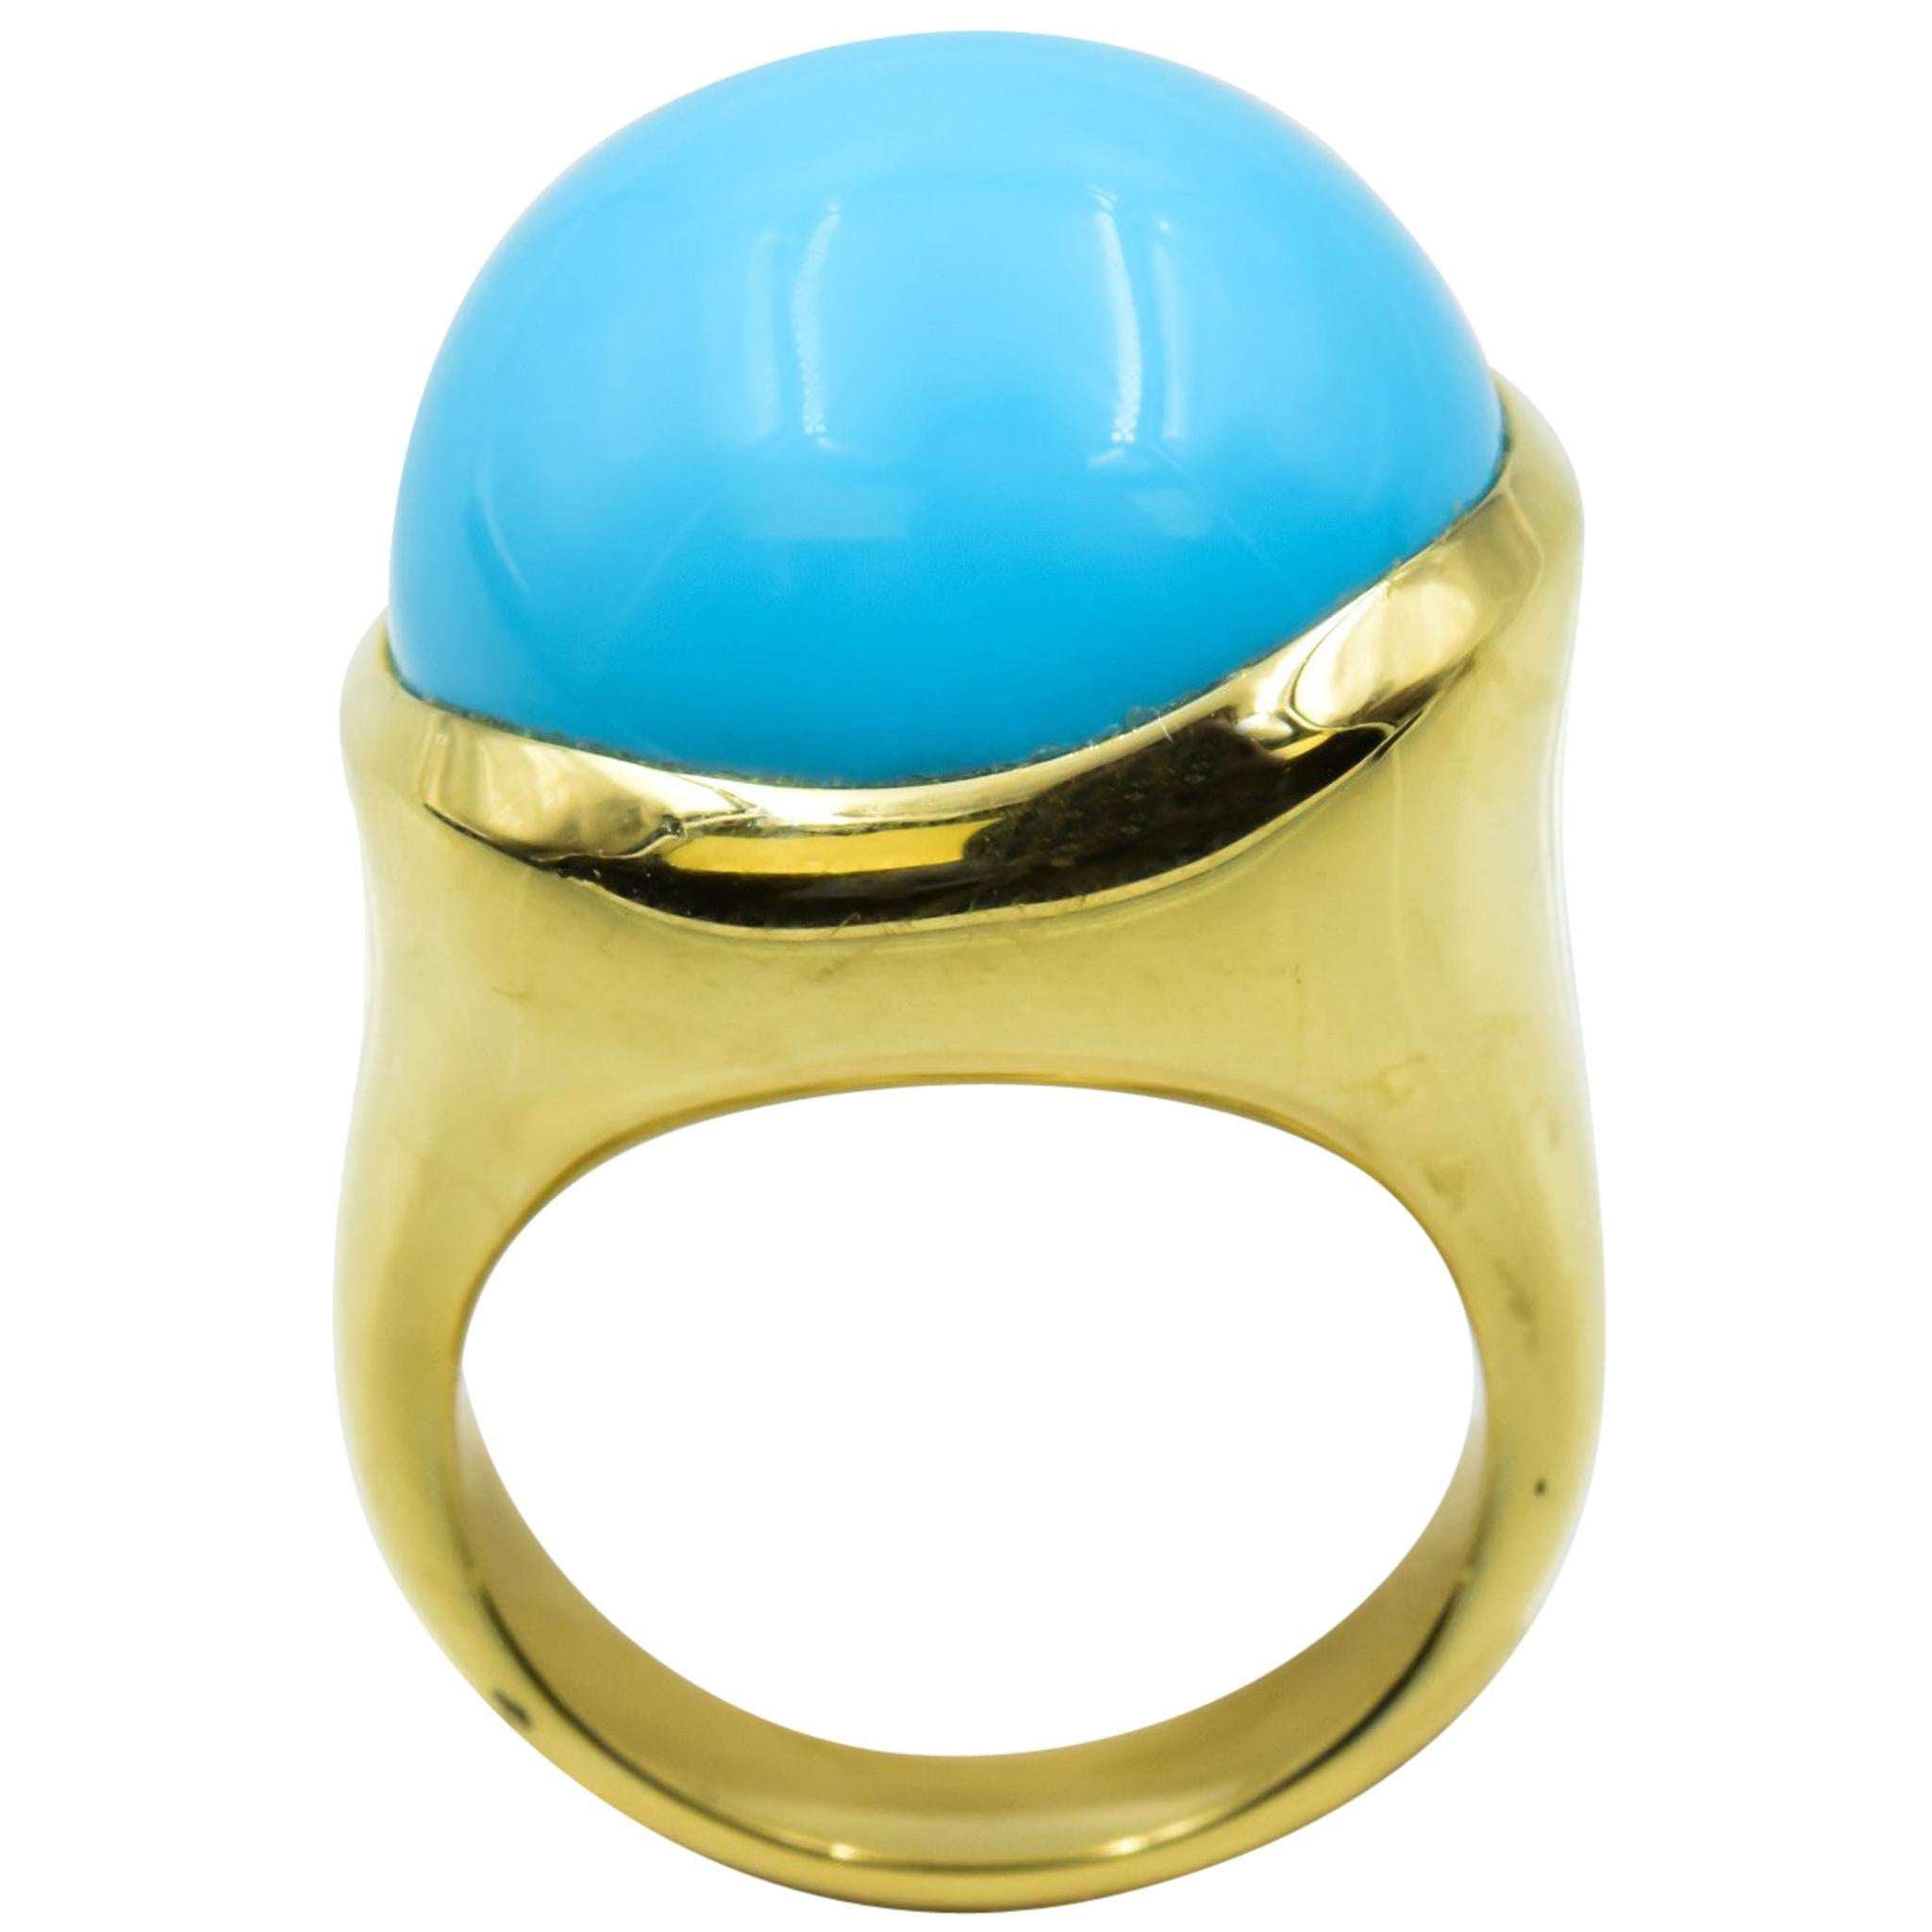 Tiffany & Co. Elsa Peretti Cabachon Robins Egg Ring in Turquoise 18 Karat Gold